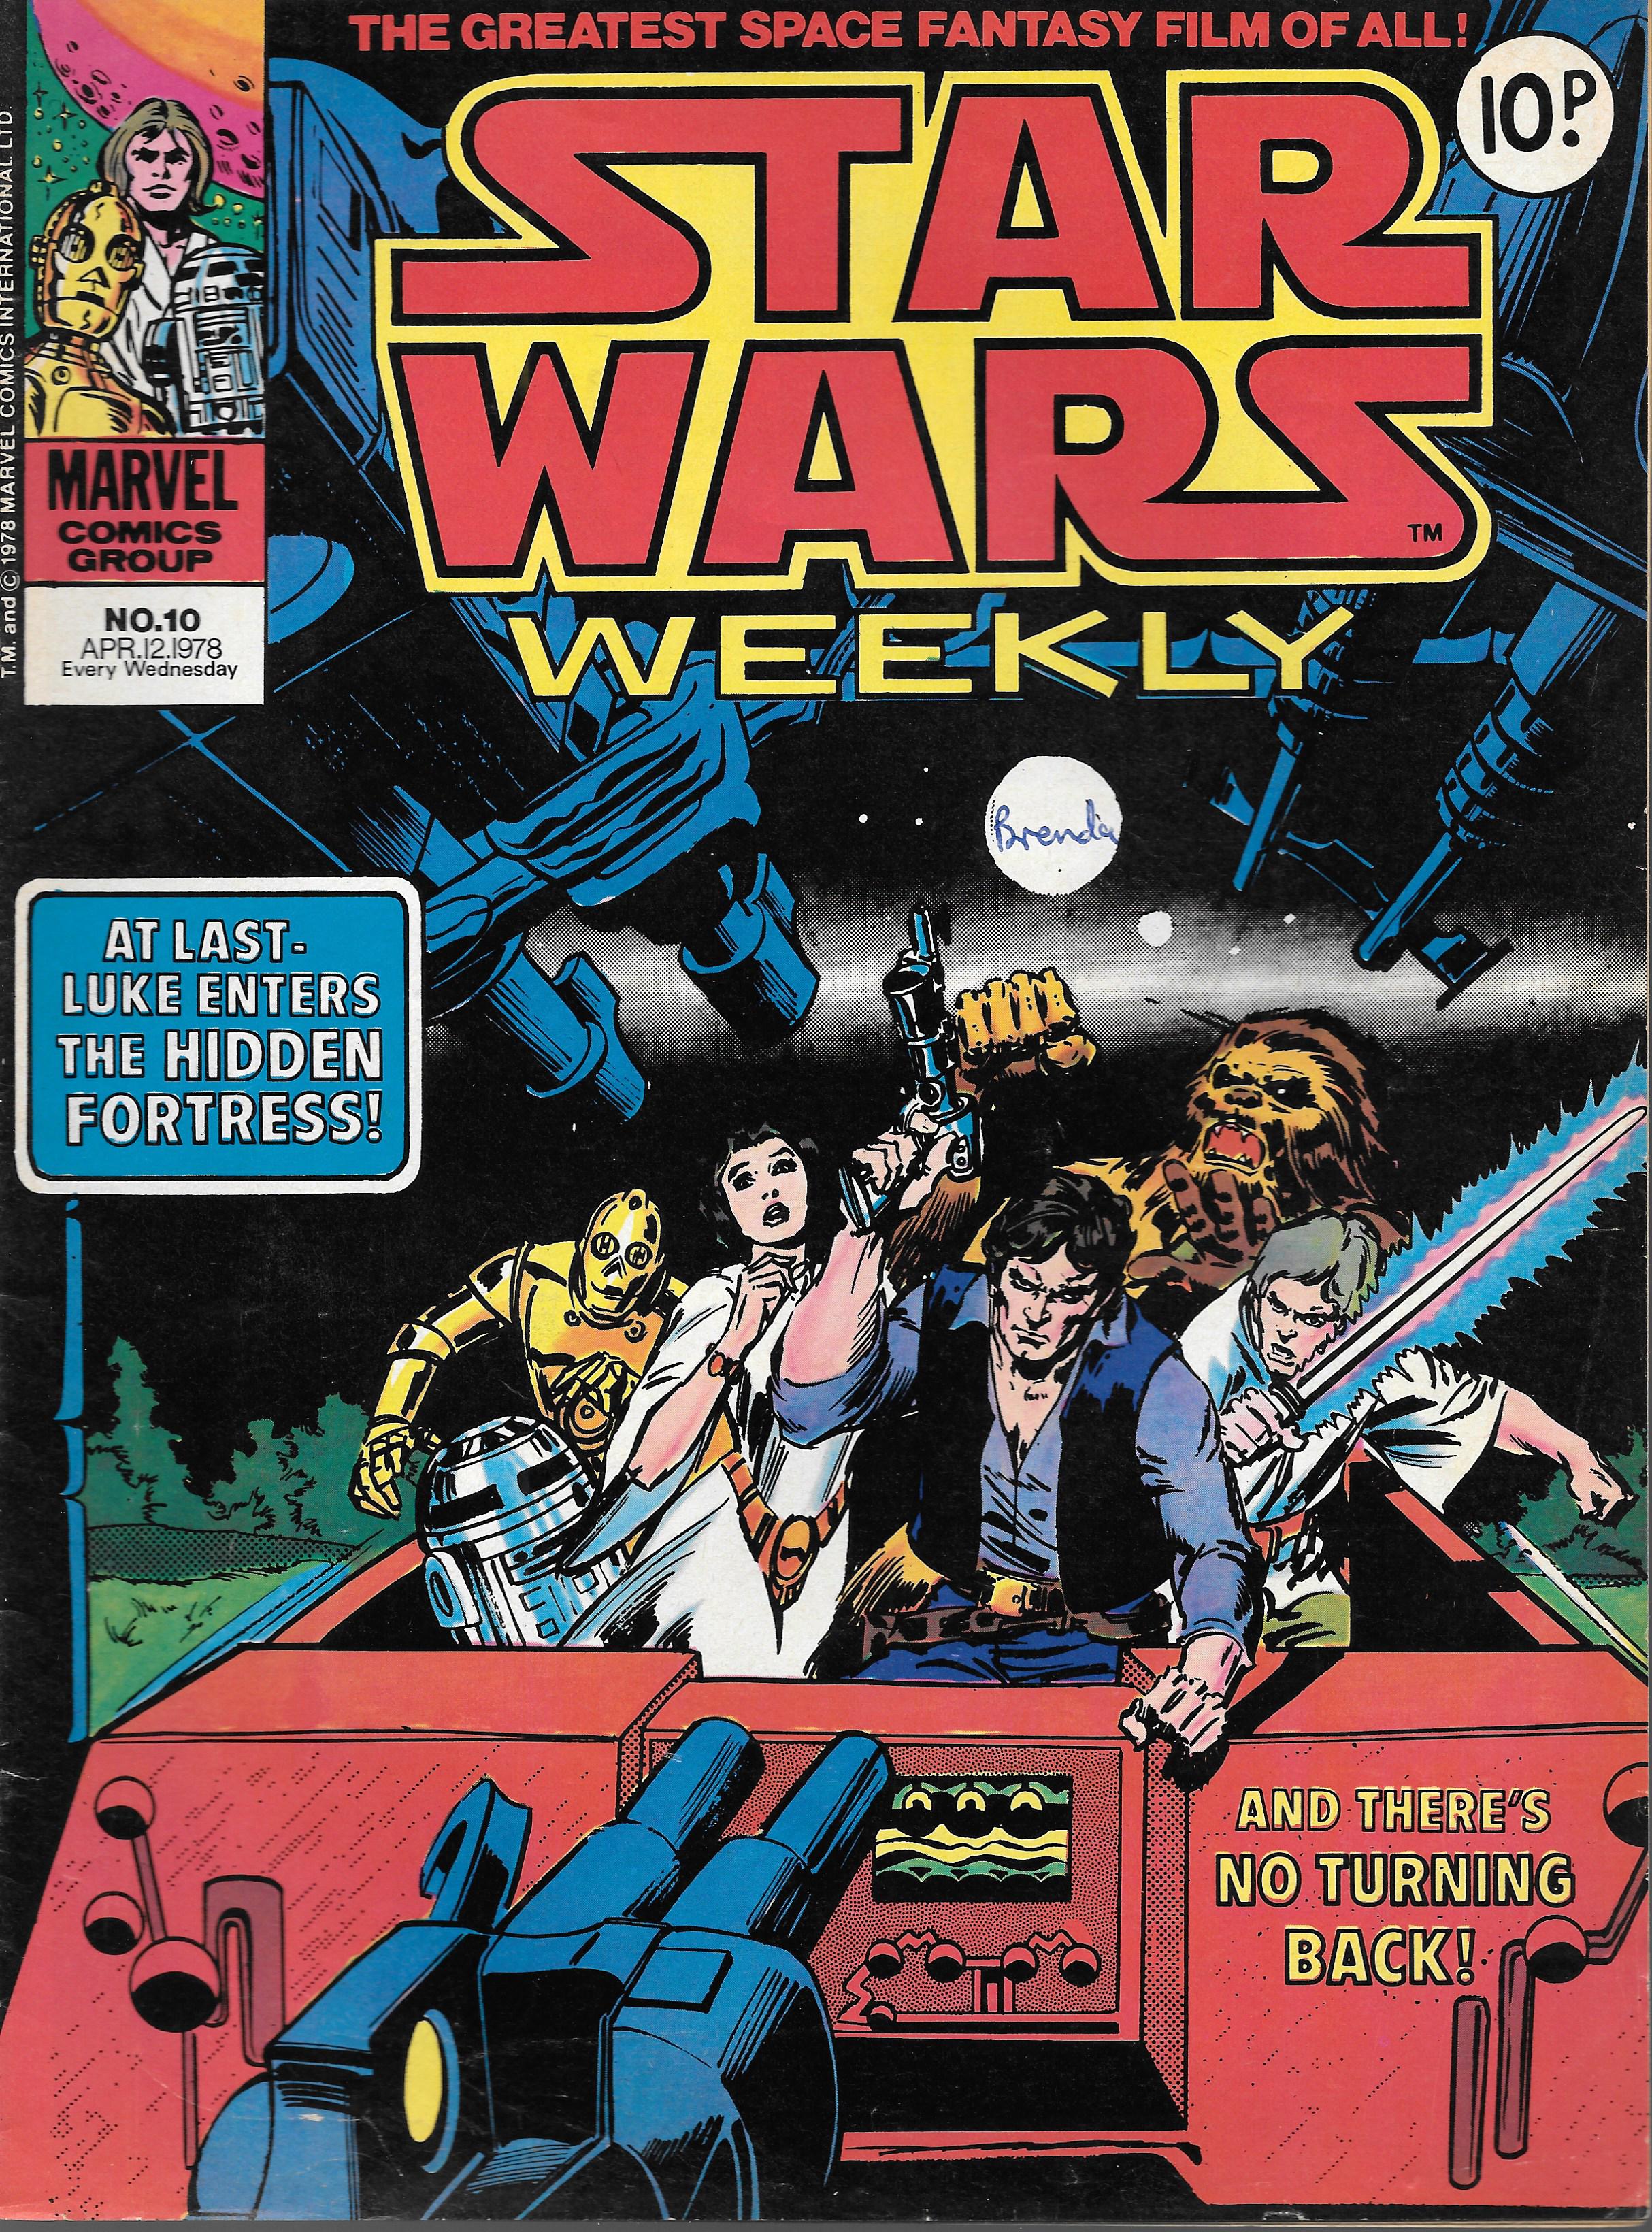 STAR WARS WEEKLY UK MARVEL COMIC NO 10 APRIL 12TH 1978 - Vintage Magazines